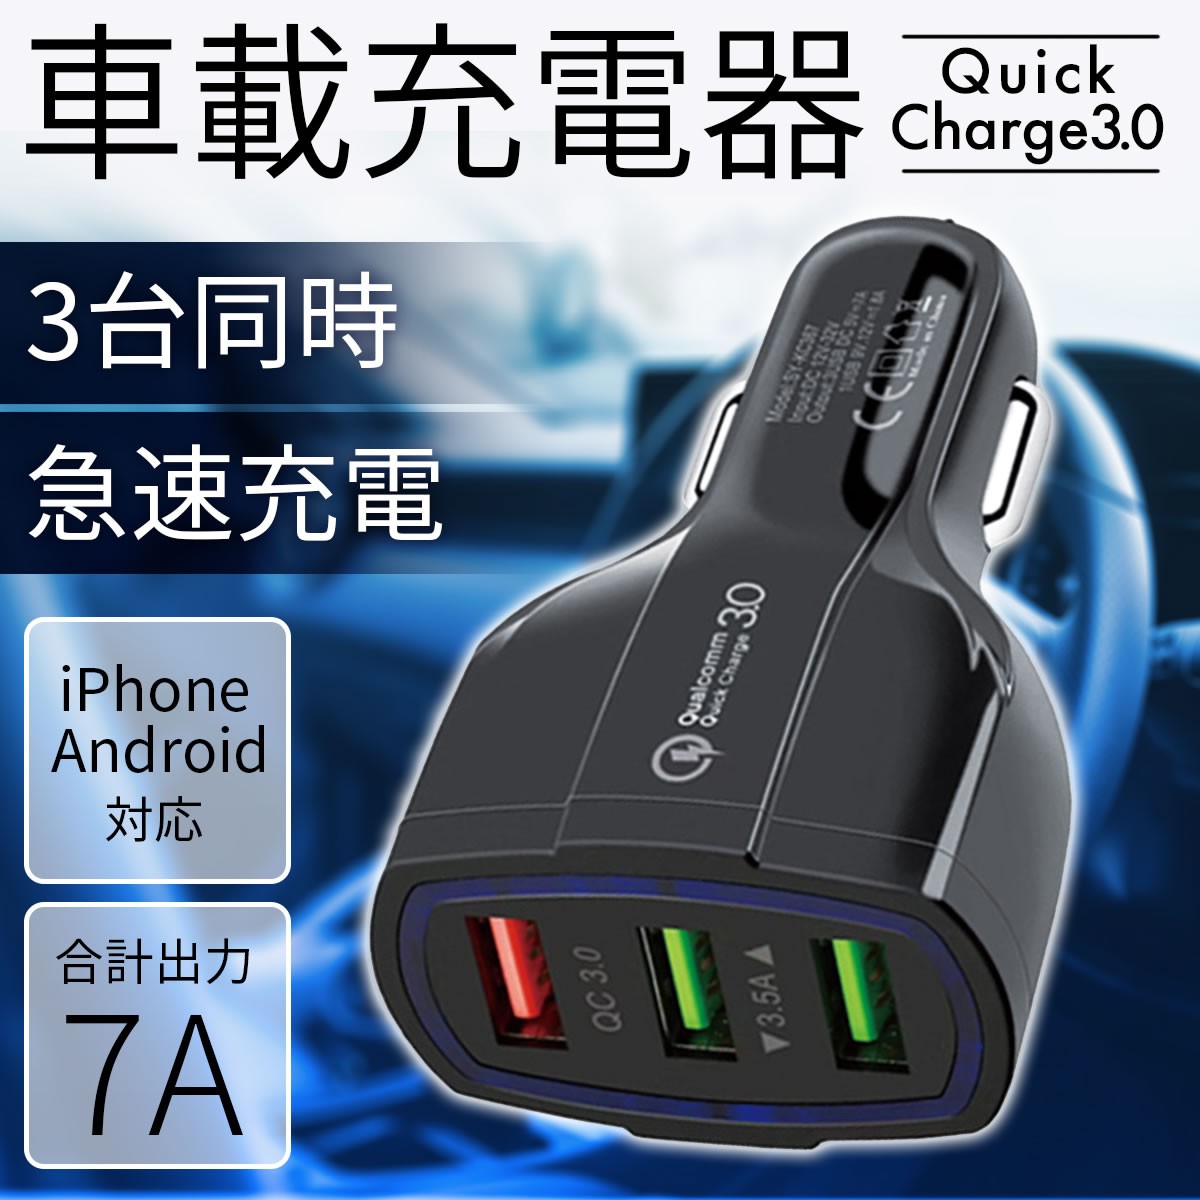 Quick charge 3.0 増設 シガーソケット 3連 カーチャージャー 充電 バッテリー 急速充電 USB スマートフォン 分配器 充電器 スマホ iphone